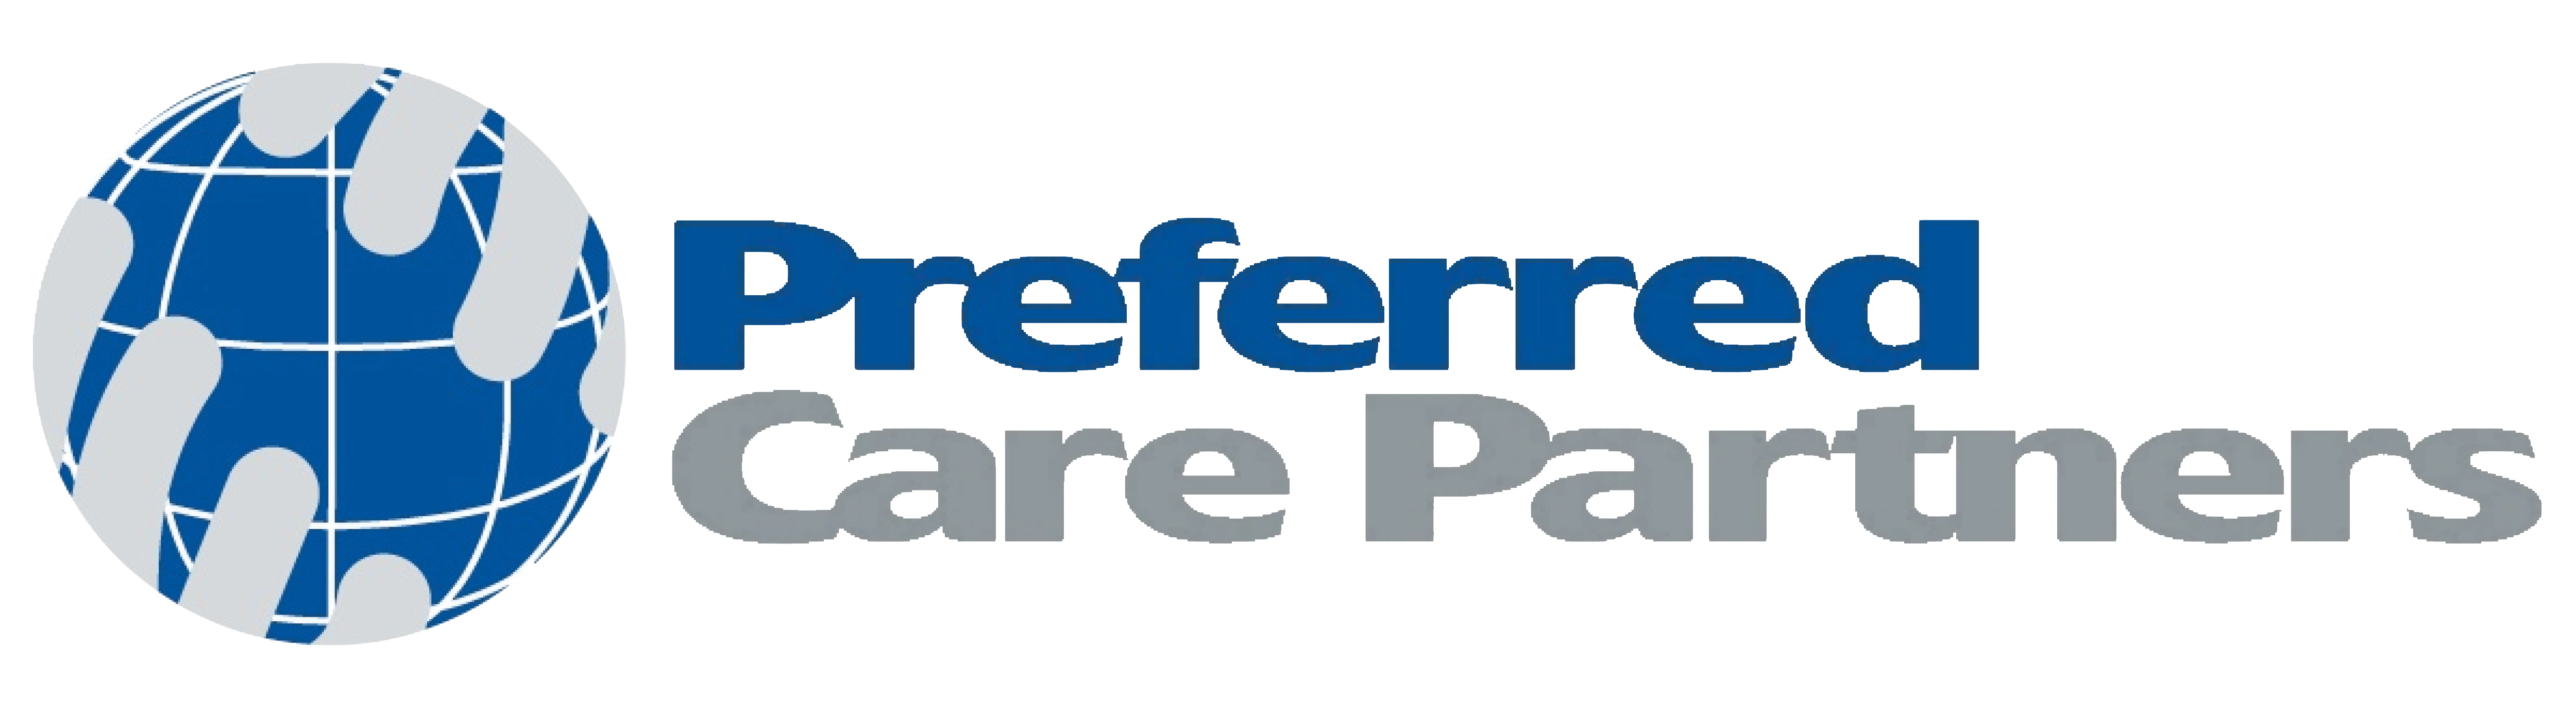 Preferred care partners logo